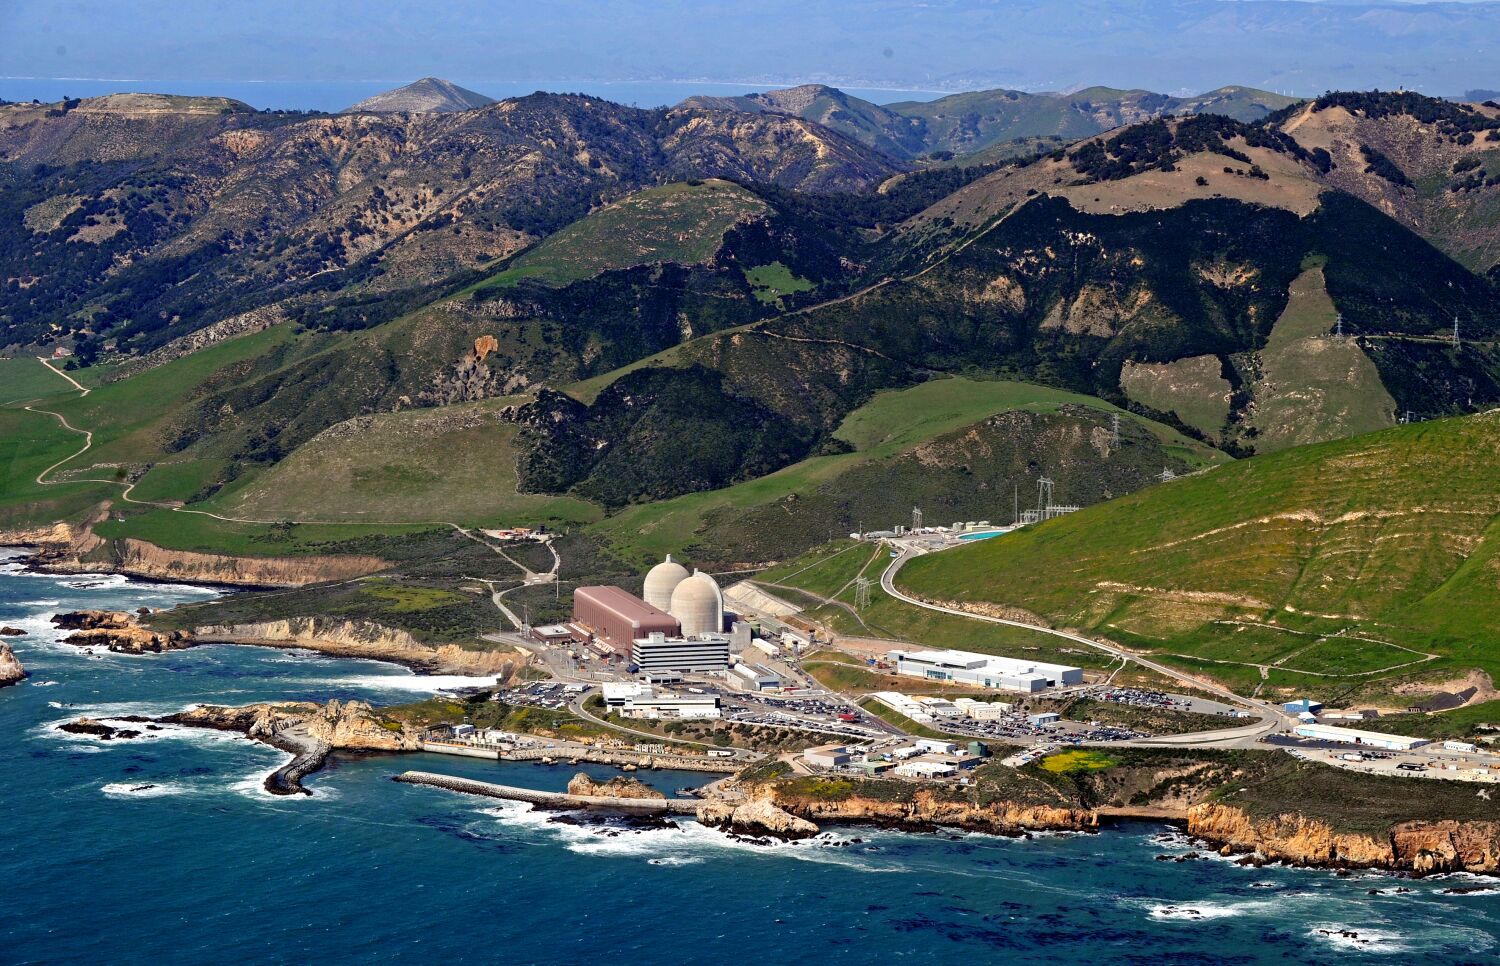 Biden gives PG&E $1 billion to keep the Diablo Canyon nuclear plant open